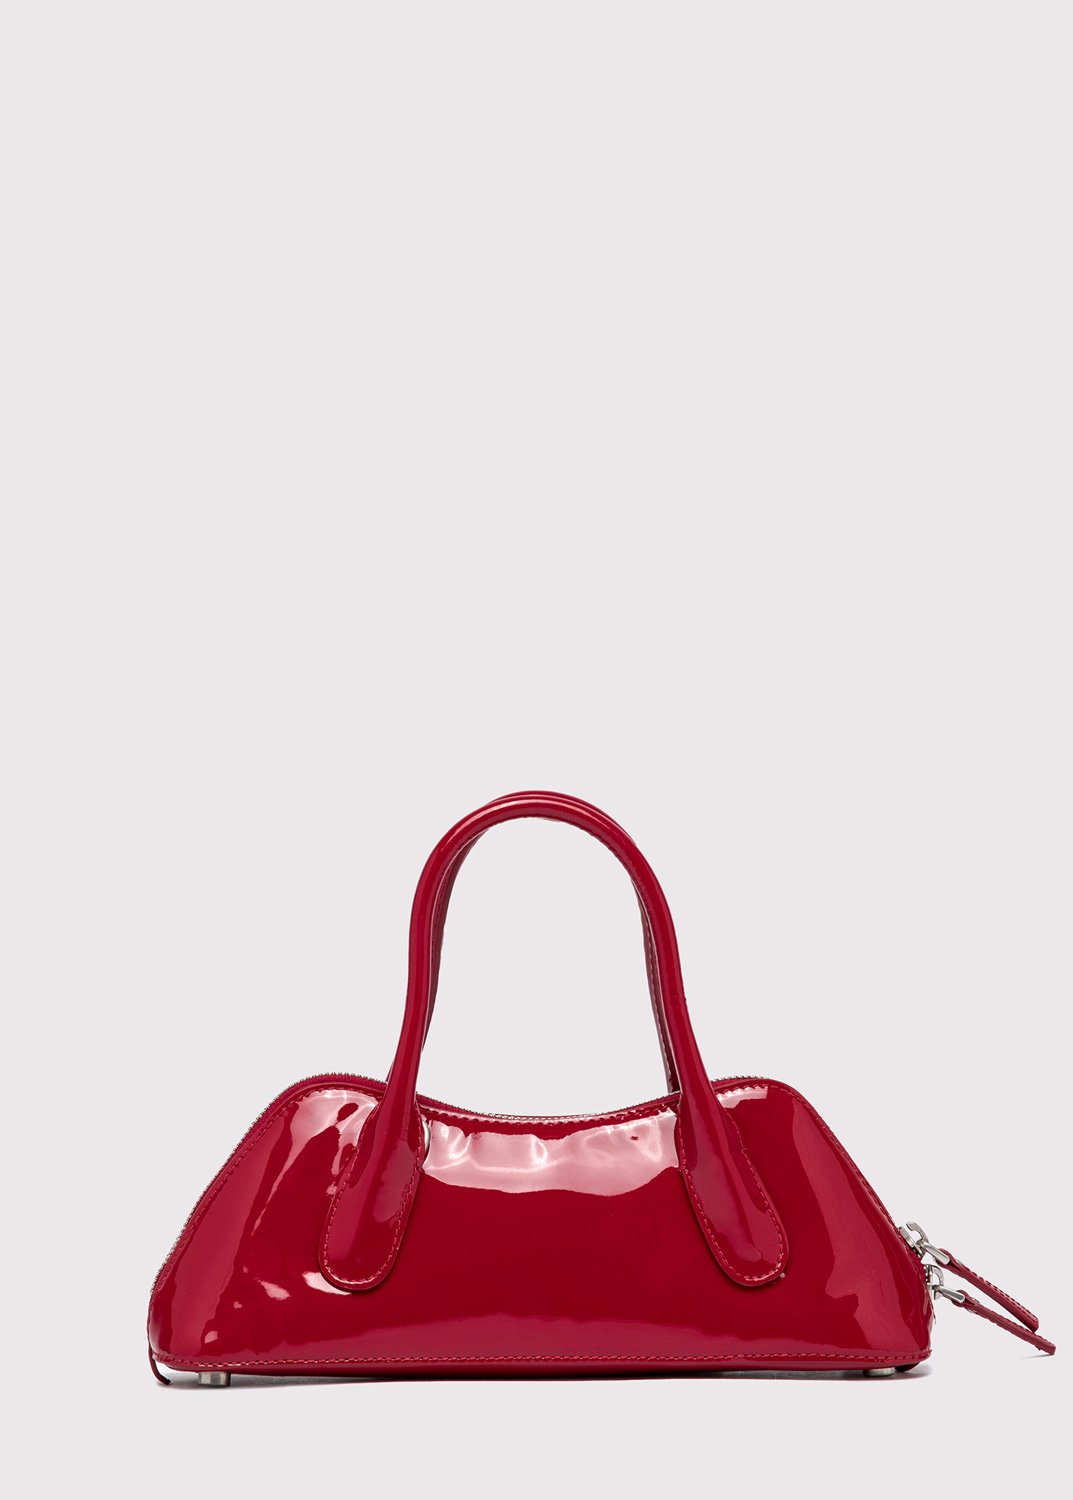 BLUGIRL BLUMARINE Bags & Handbags for Women for sale